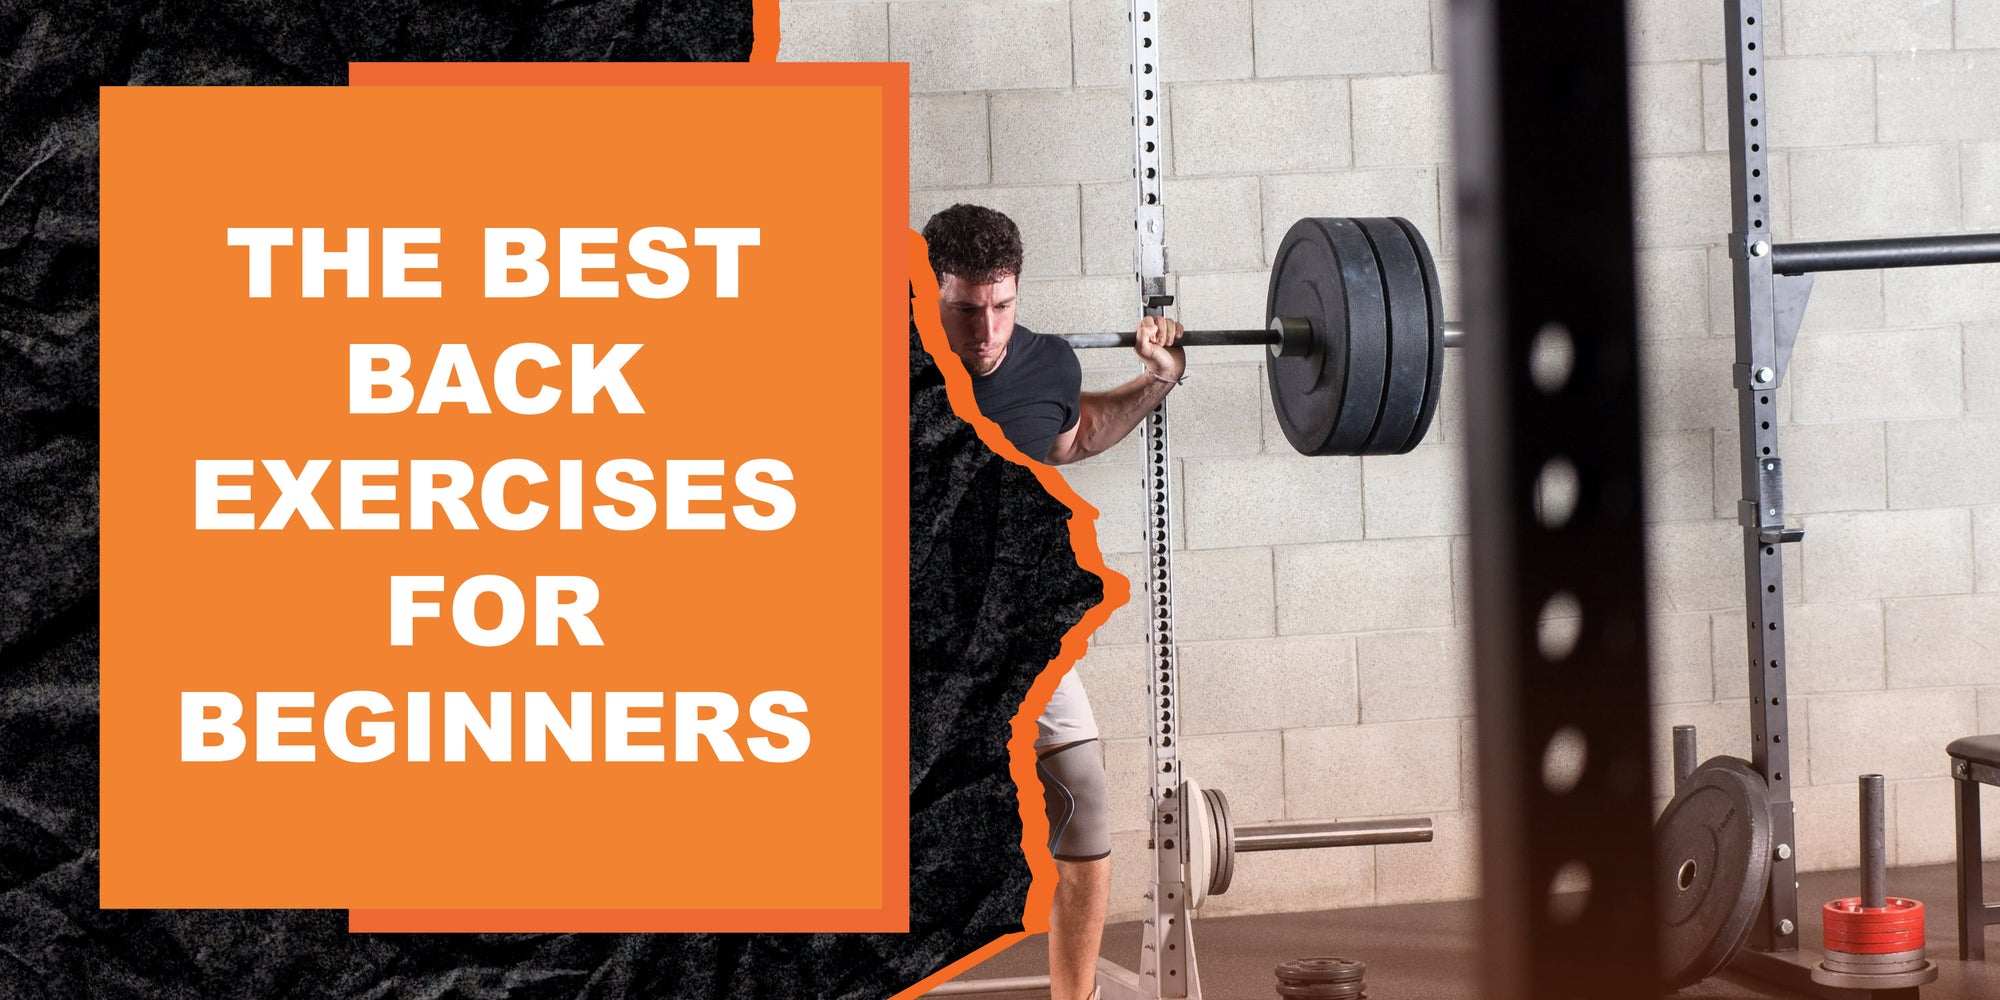 The Best Back Exercises for Beginners